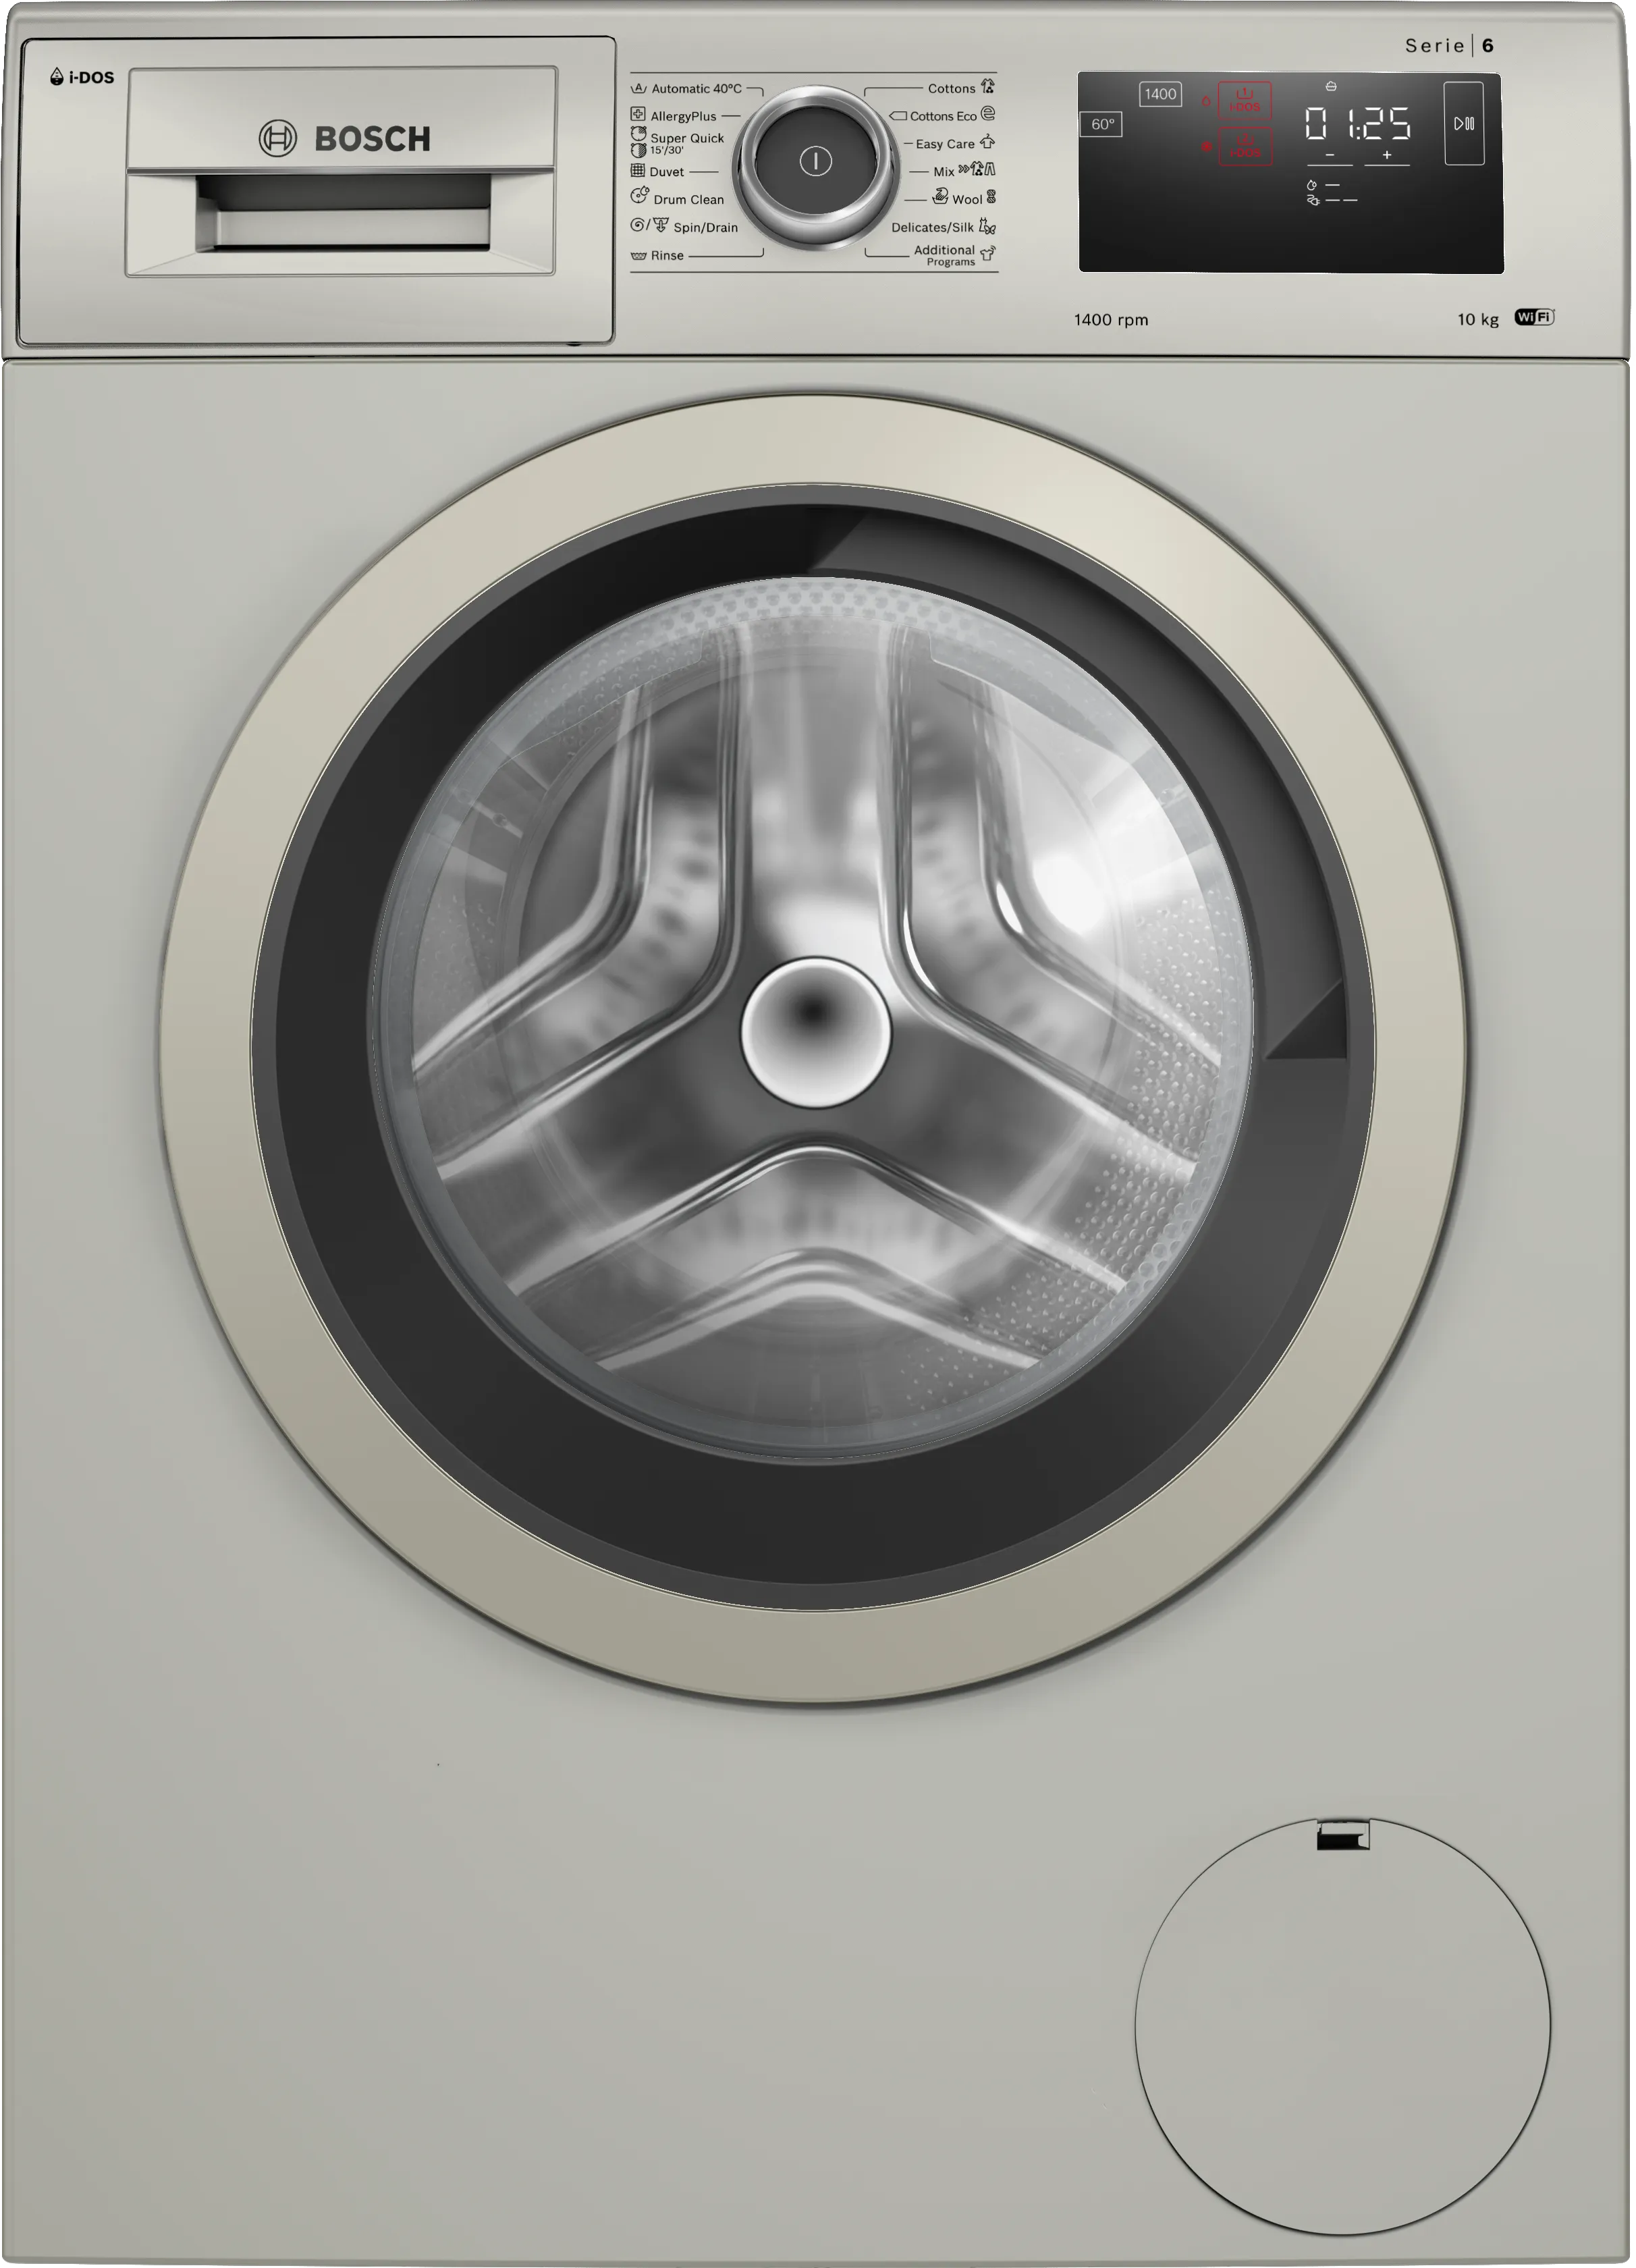 Series 6 Frontloader Washing Machine 10 kg , Silver inox 